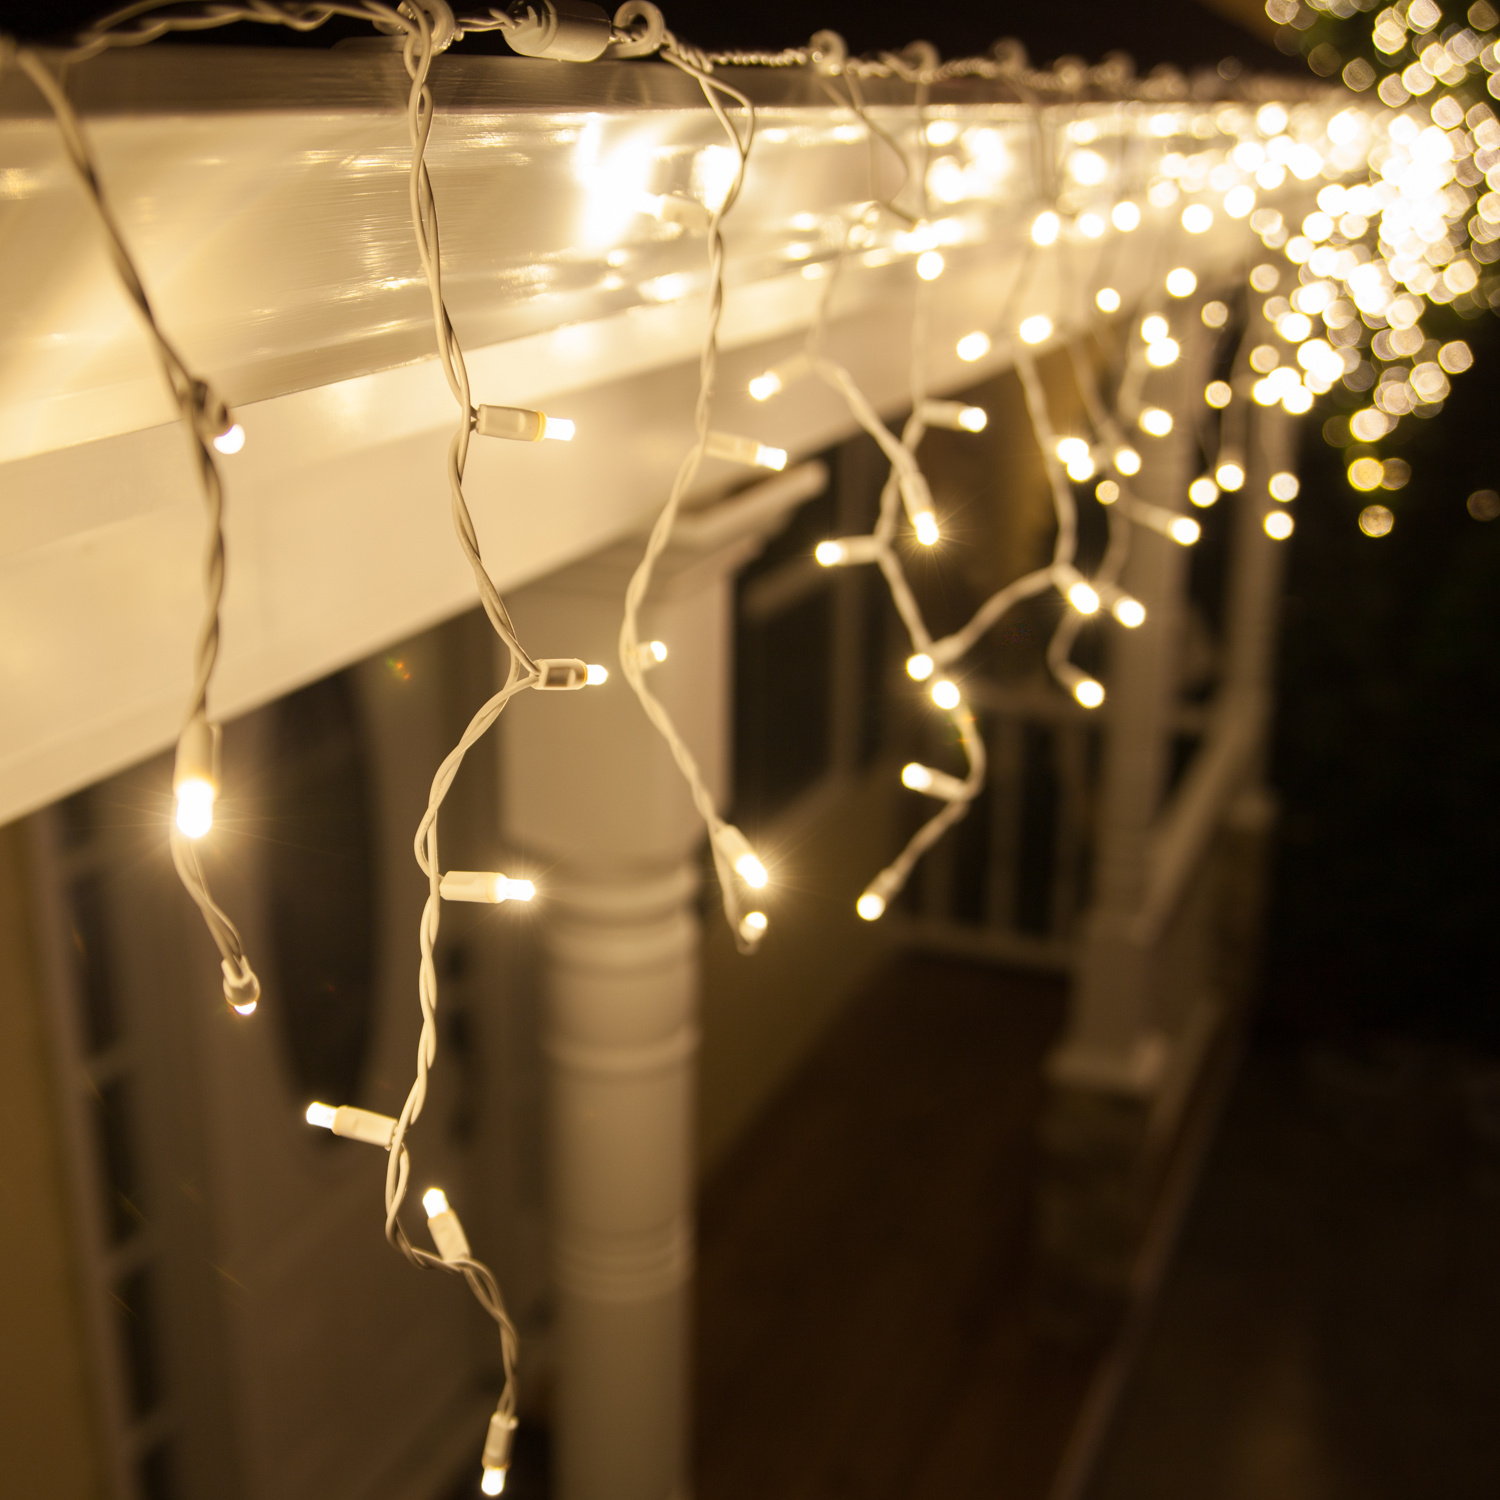 LED Christmas Lights - 70 5mm Warm White Twinkle LED Icicle Lights